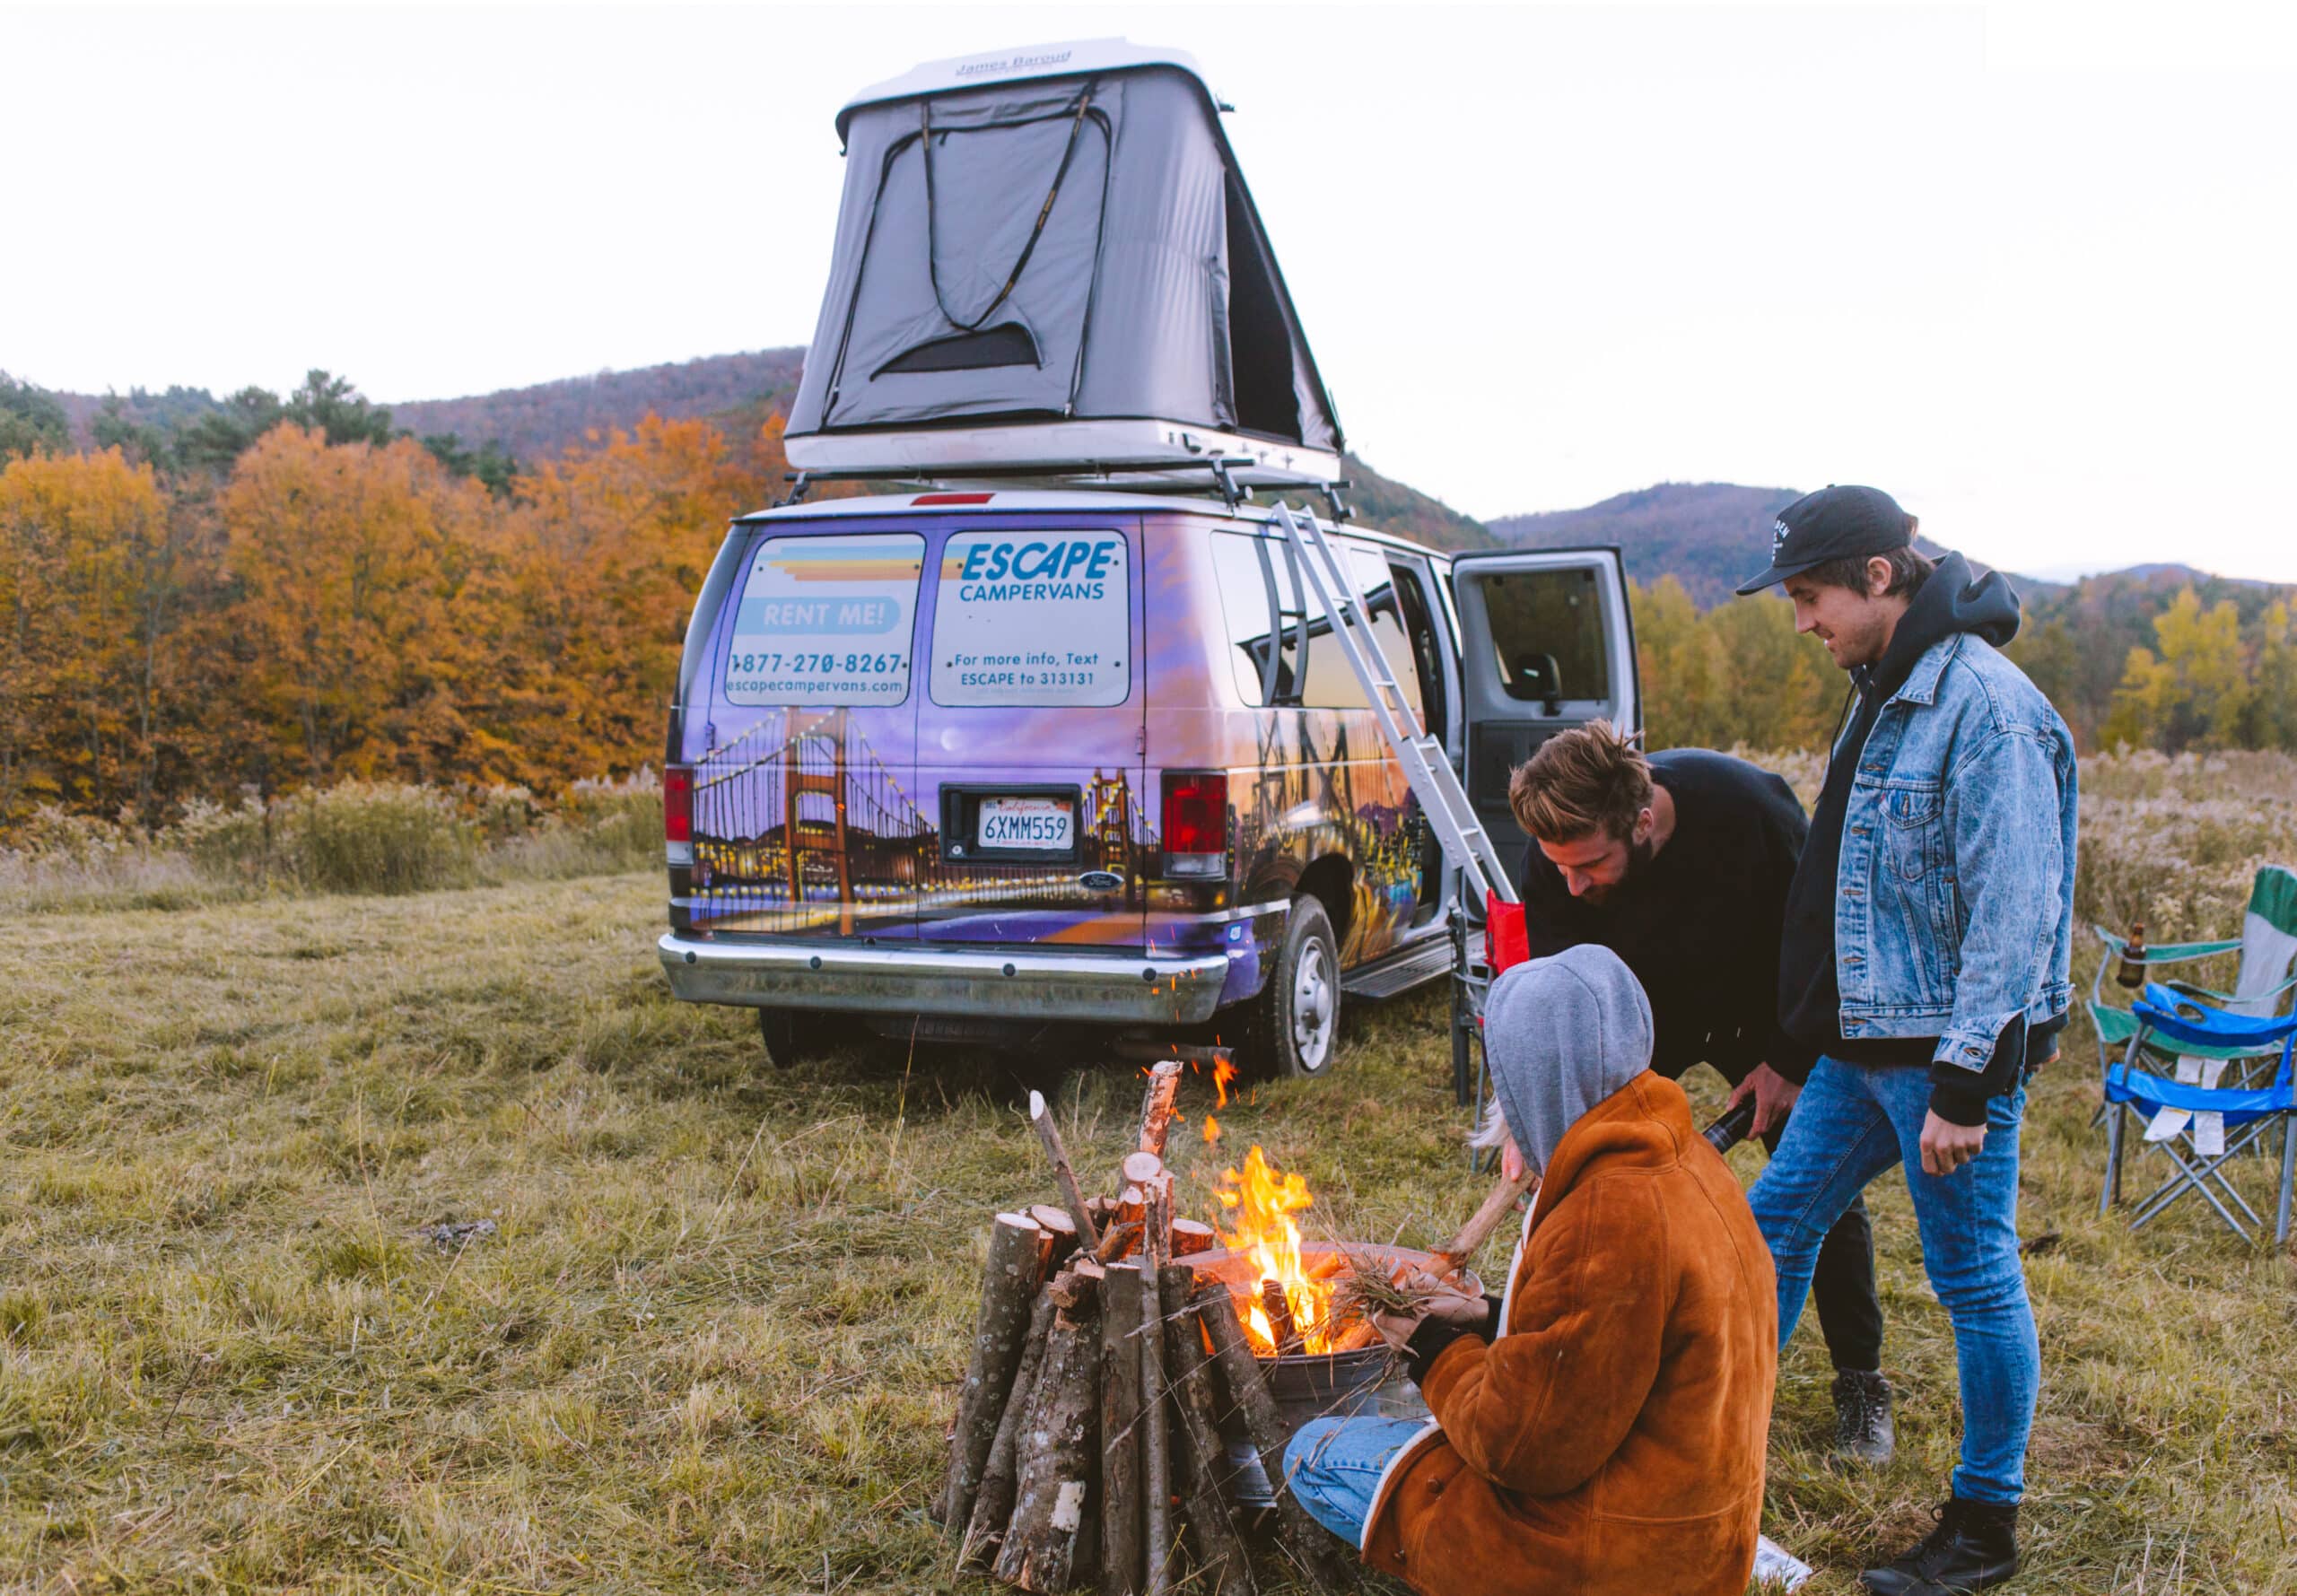 Friends sitting around a campfire sitting infront of an Escape Camper Van.